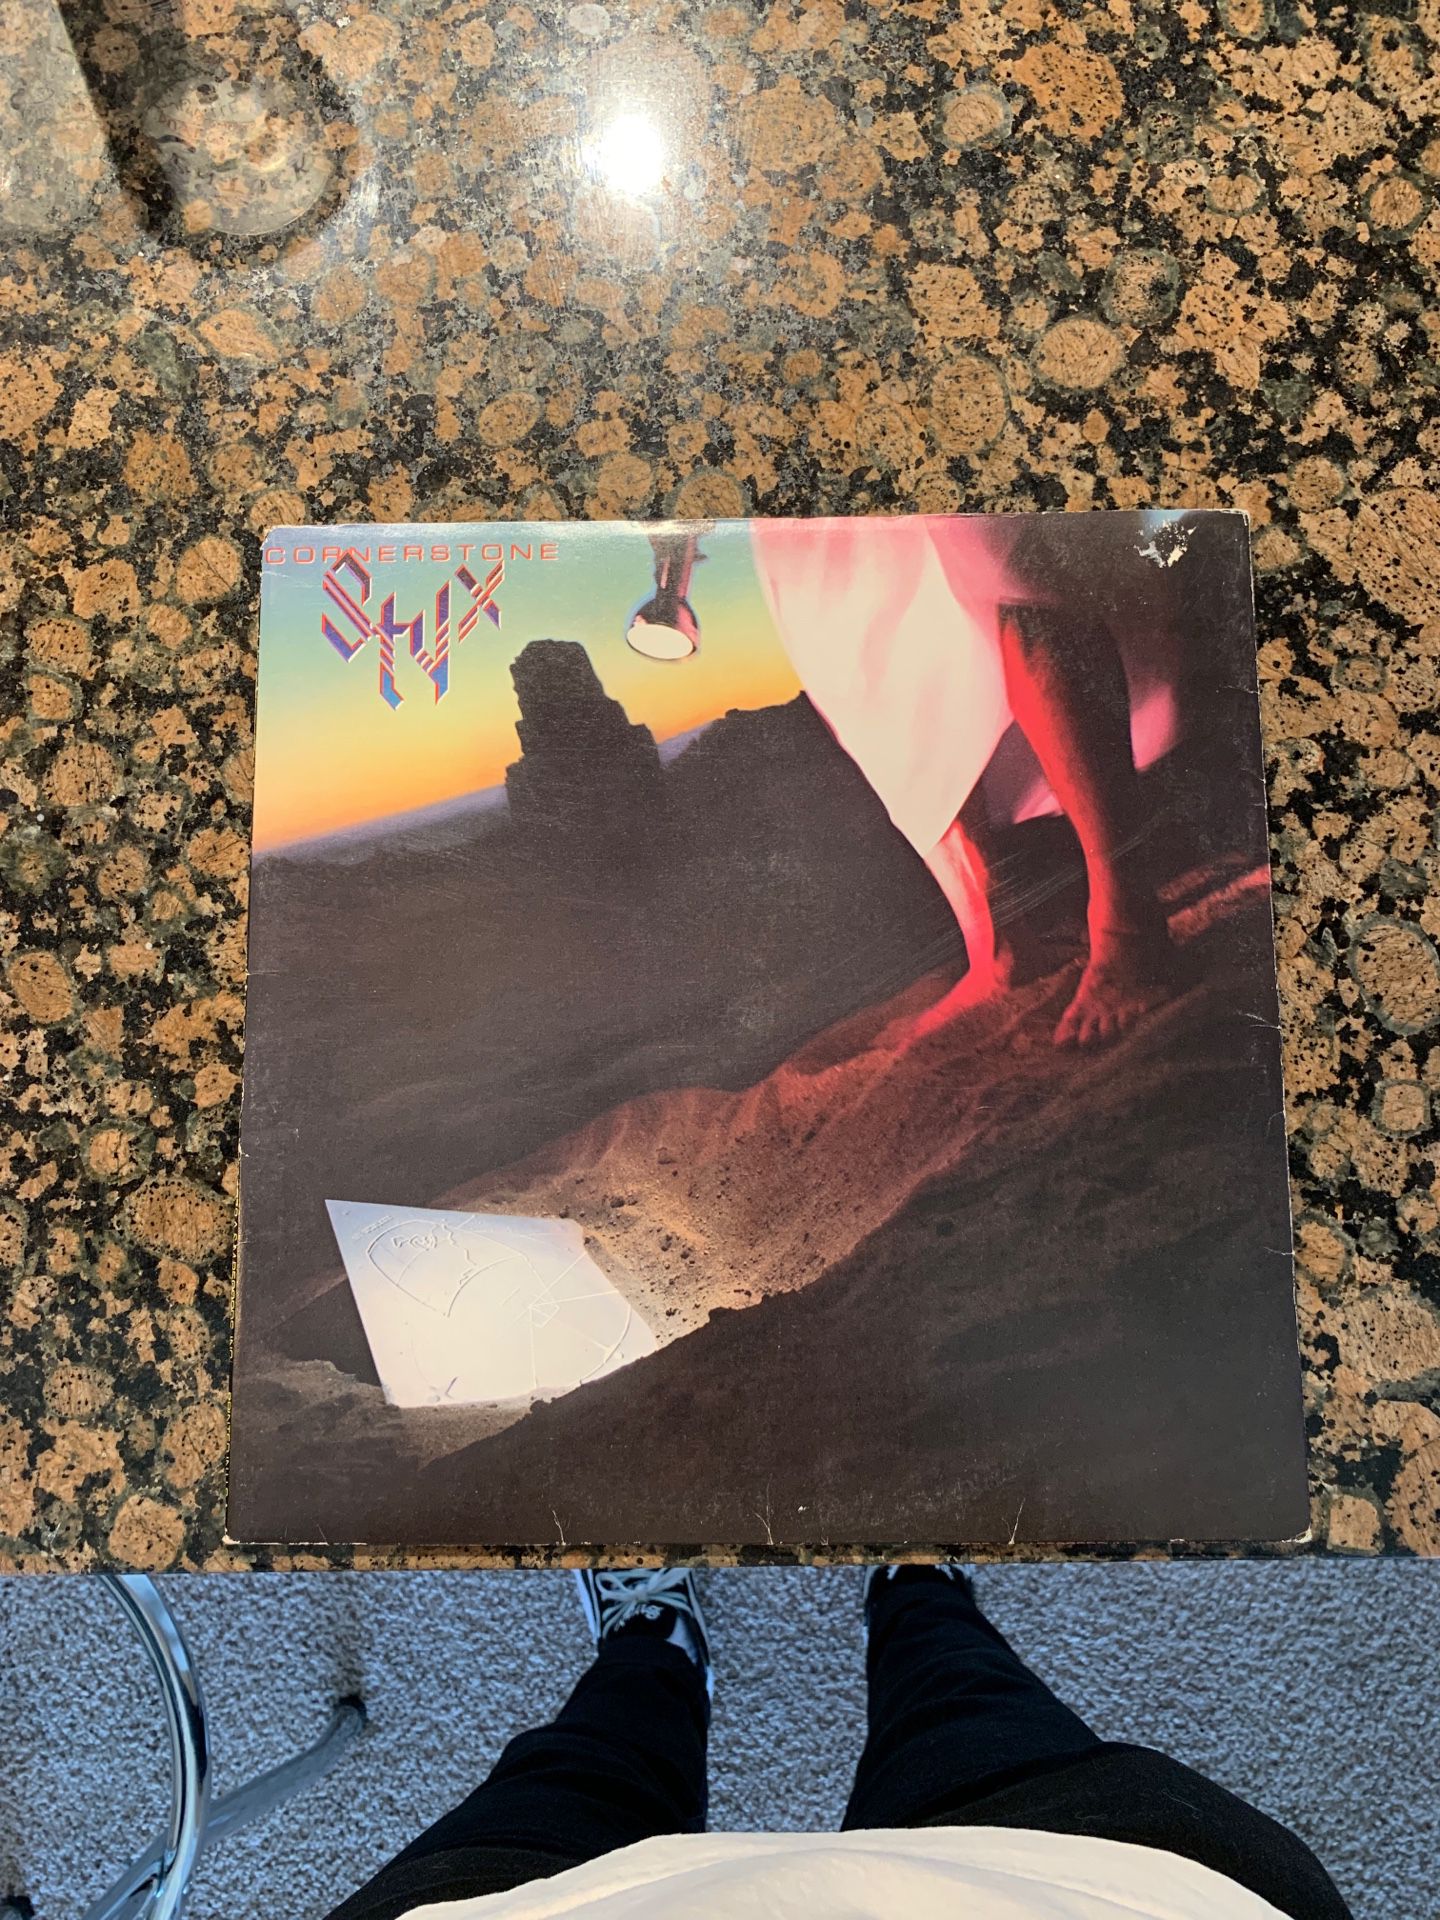 Styx cornerstone 1979 vinyl